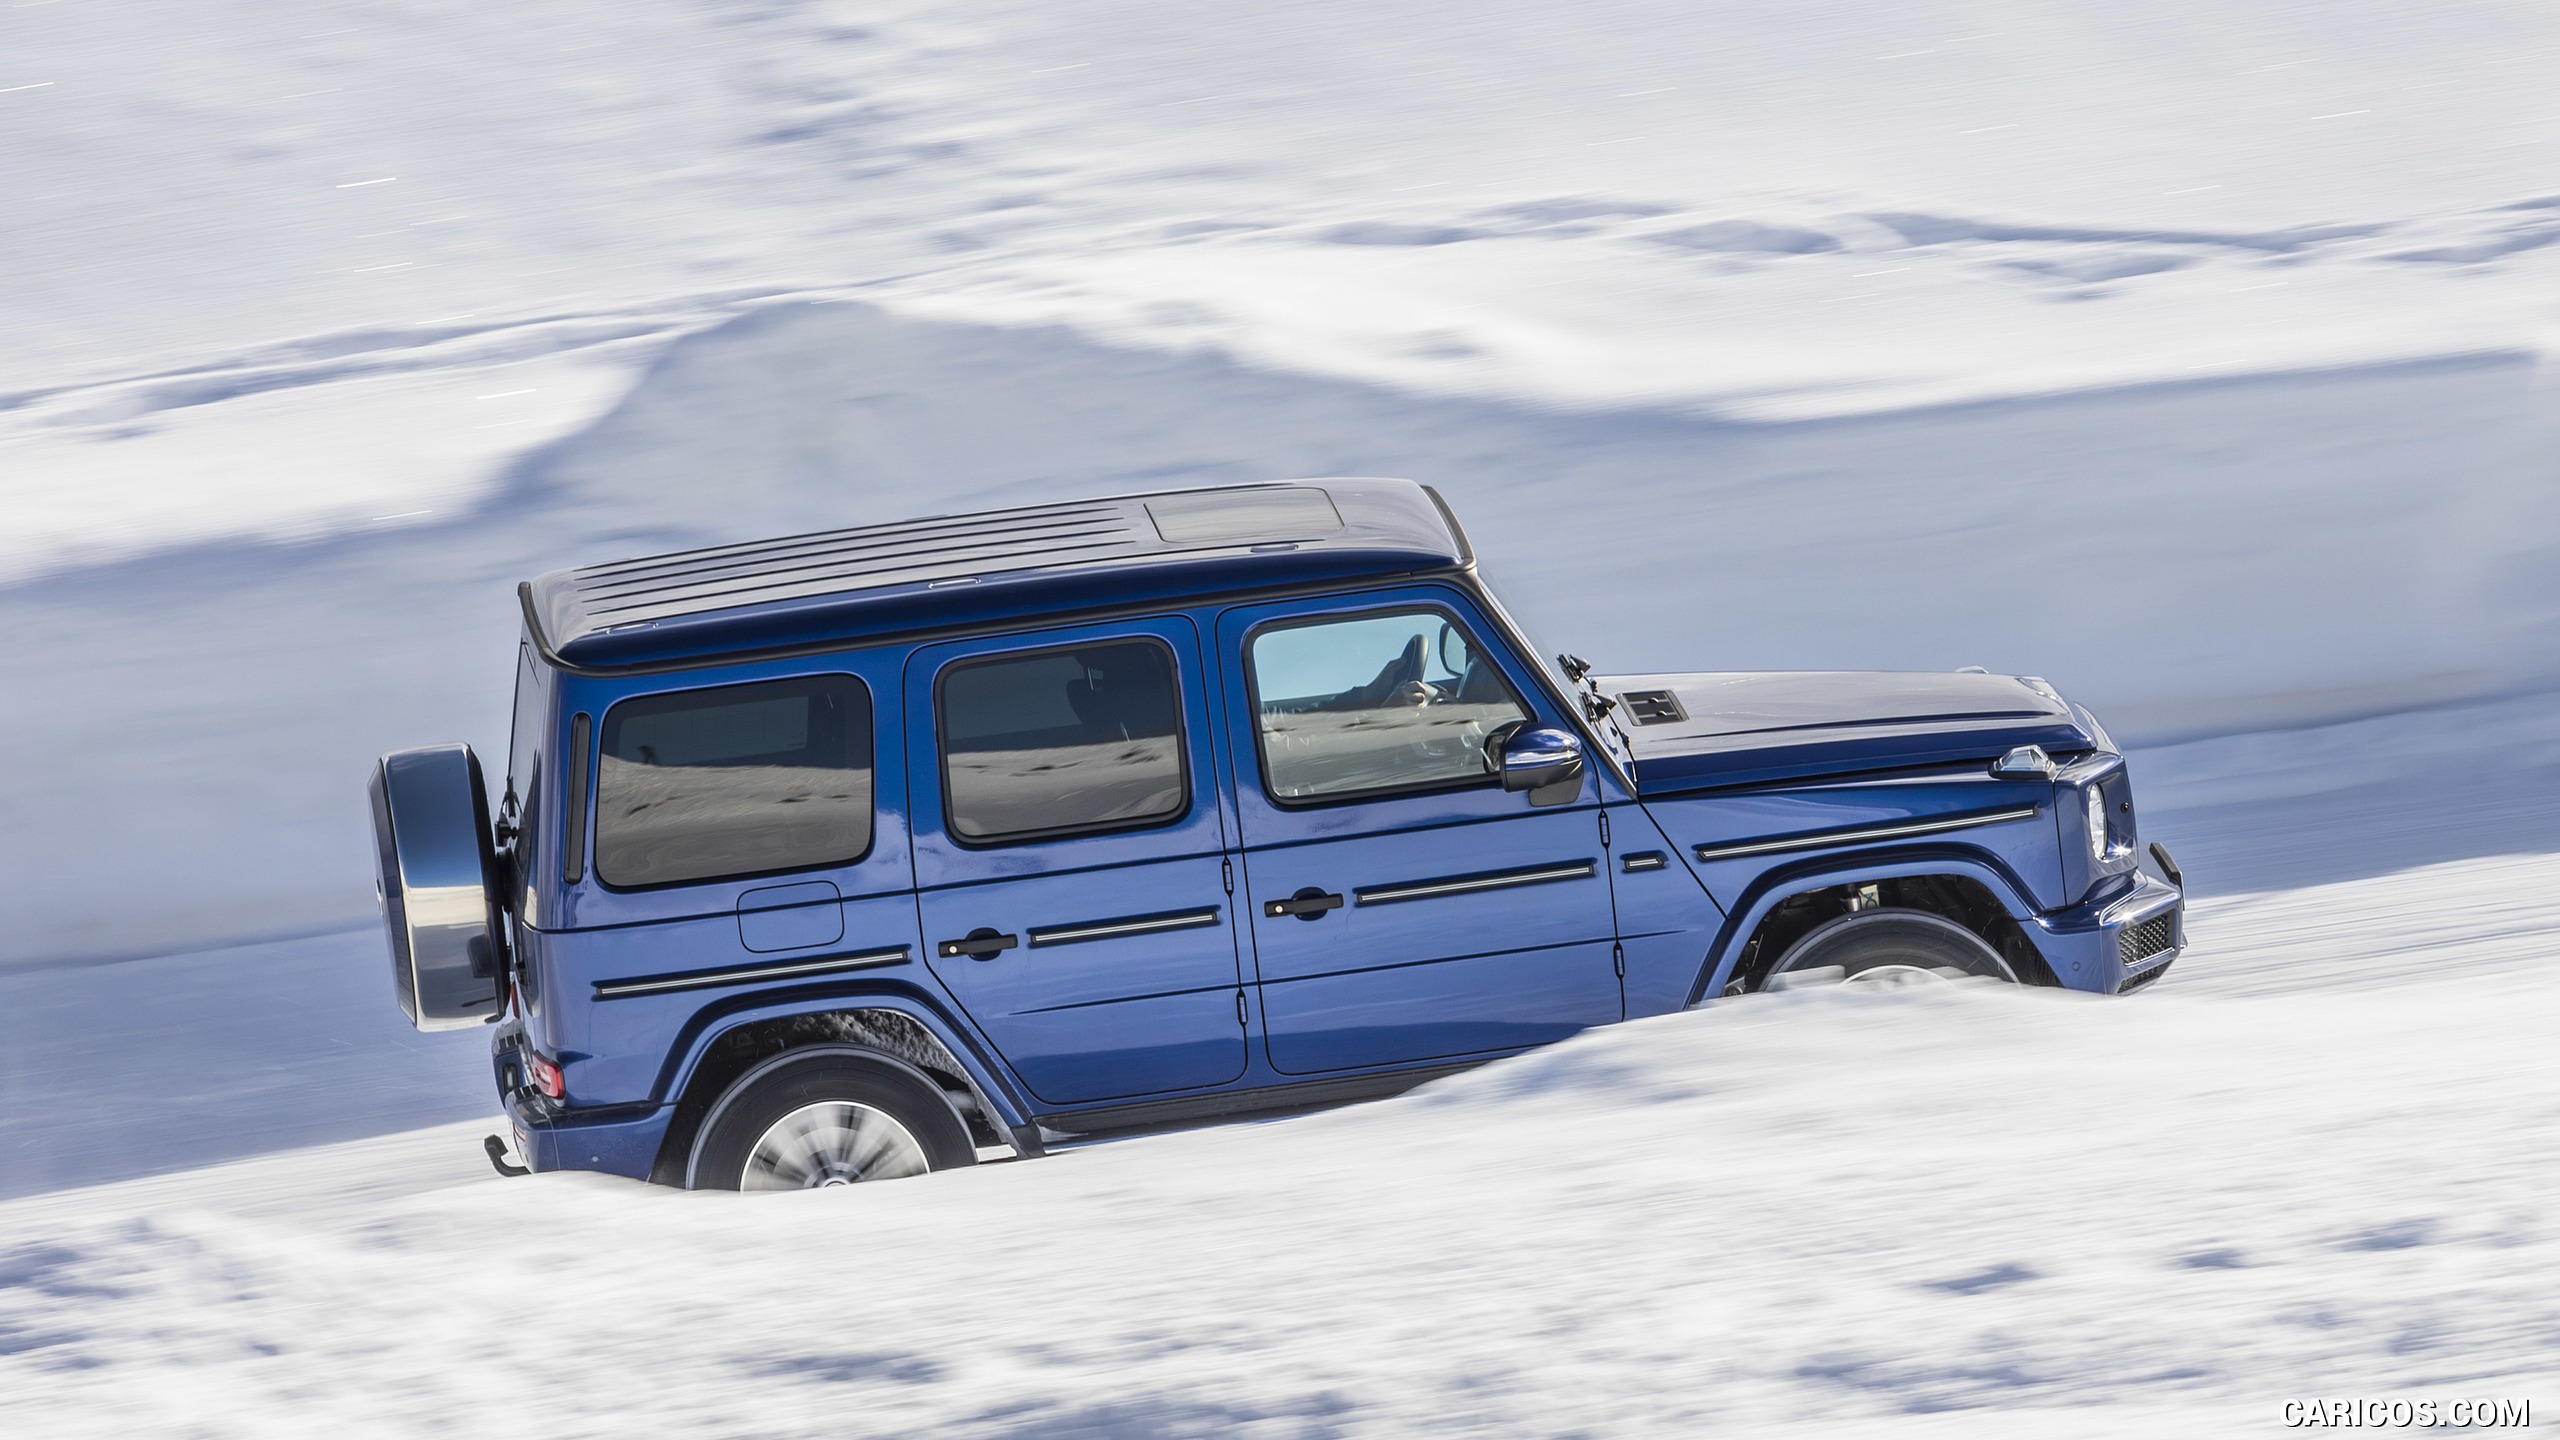 2019 Mercedes-Benz G 350 d (Brilliant Blue Metallic) - In Snow - Side, #33 of 51